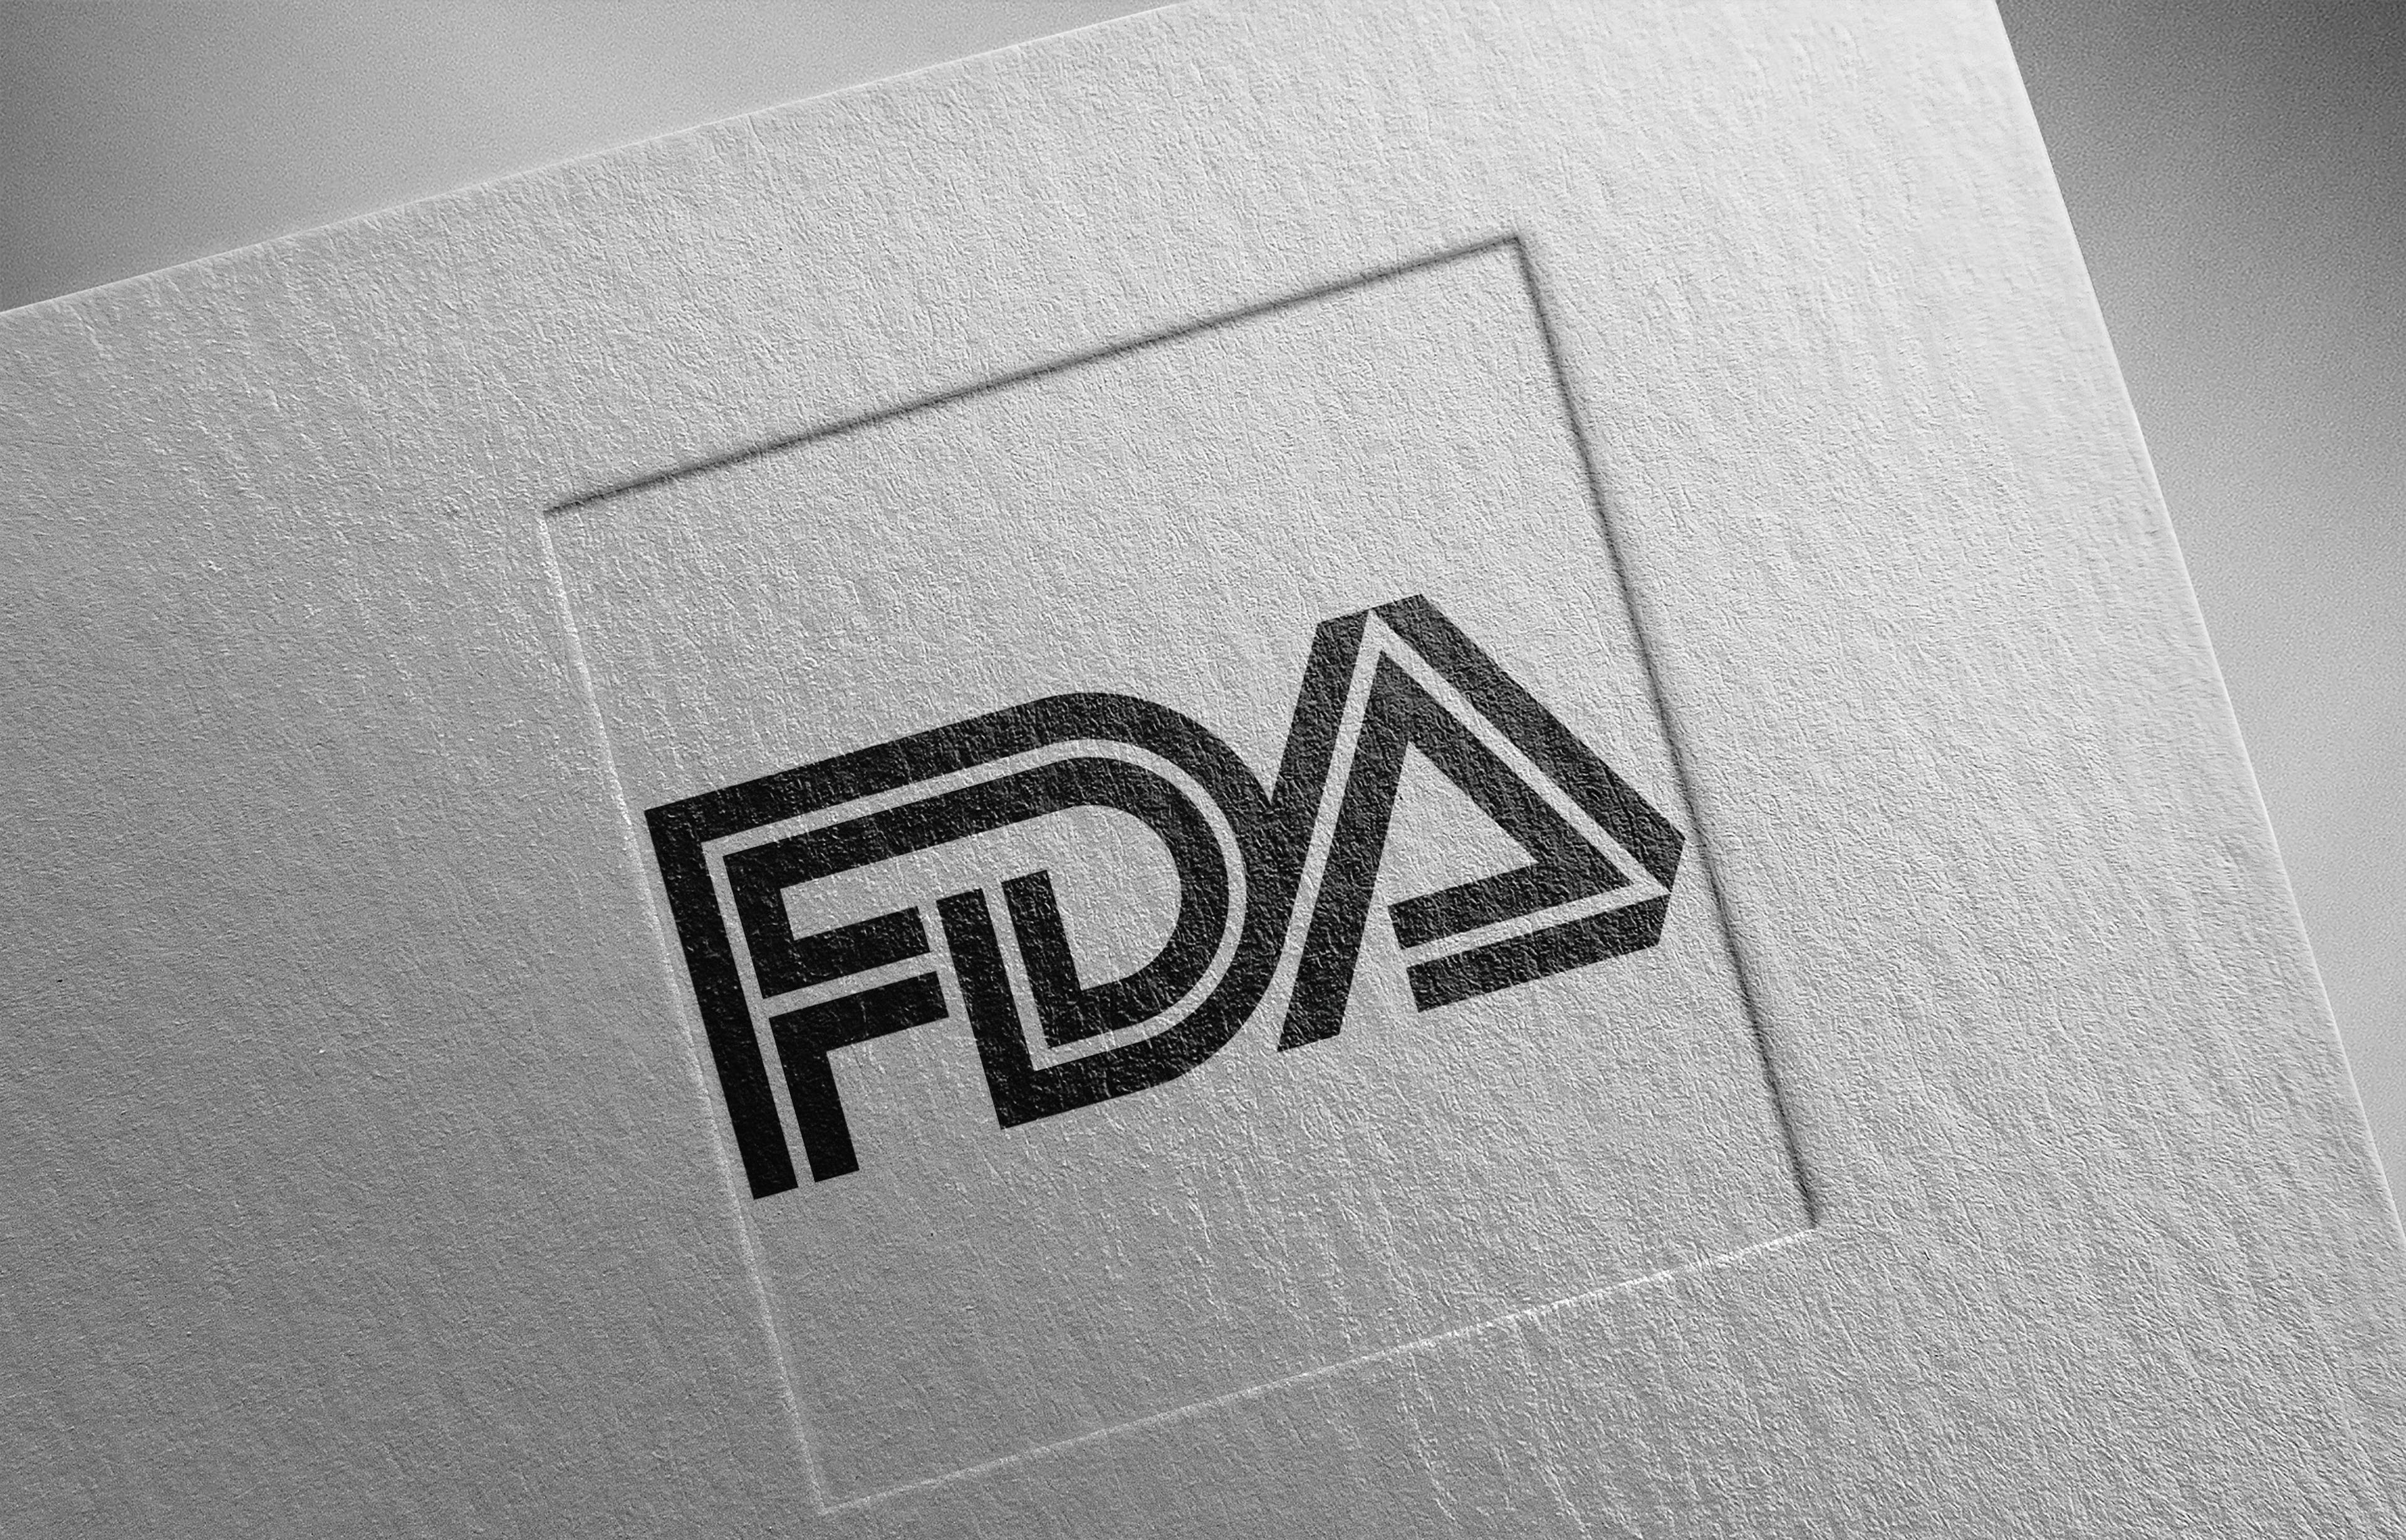 FDA on paper texture | Image credit: © Araki illustrations - © stock.adobe.com